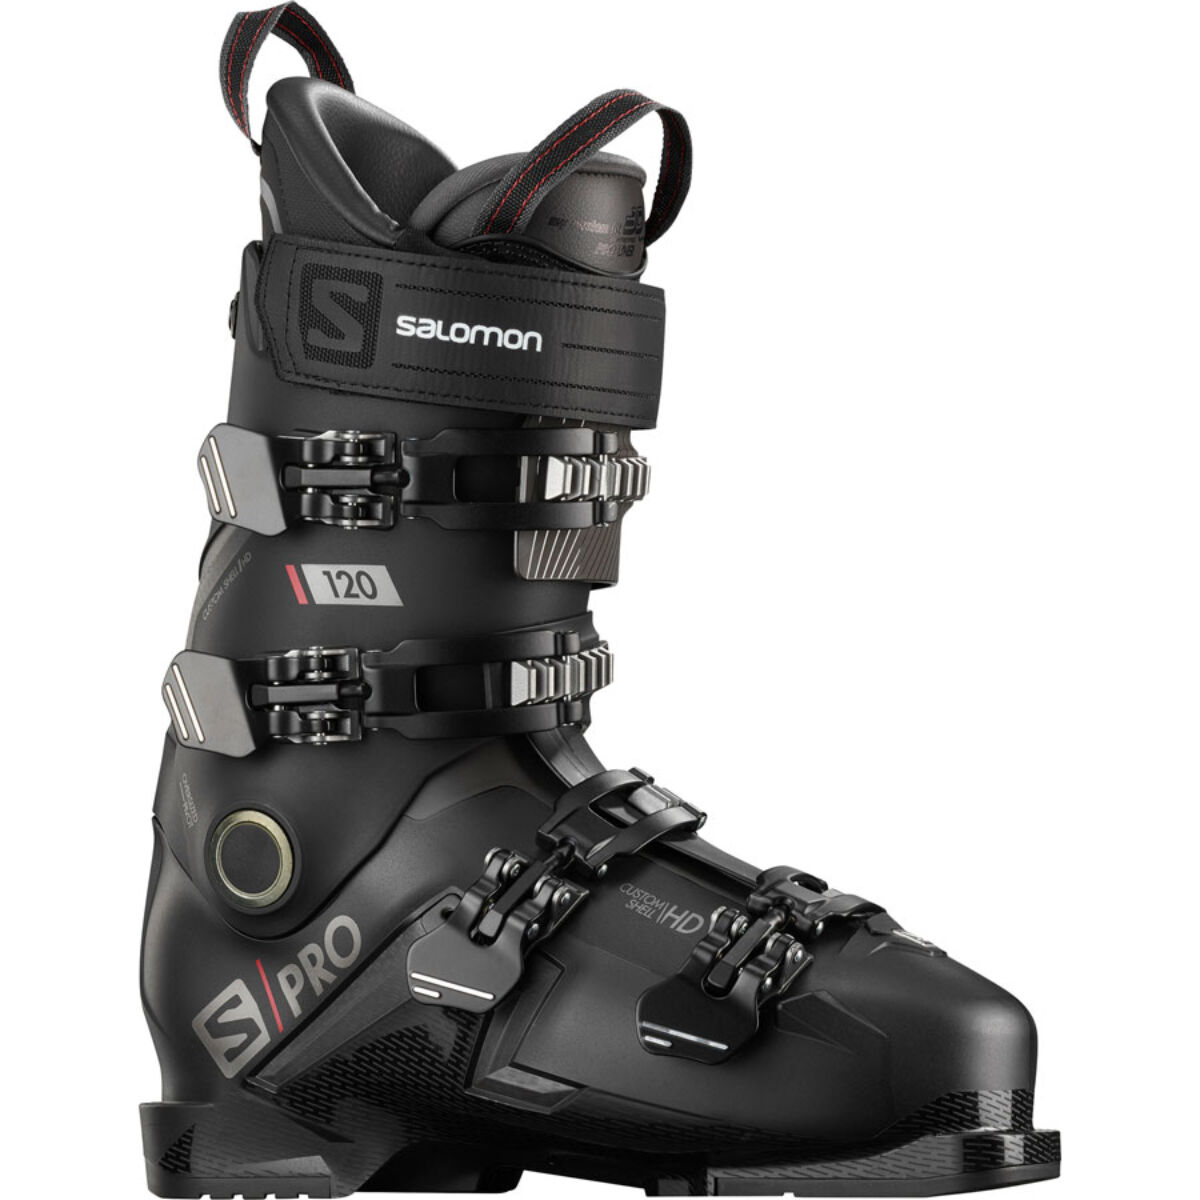 size 31.5 ski boots